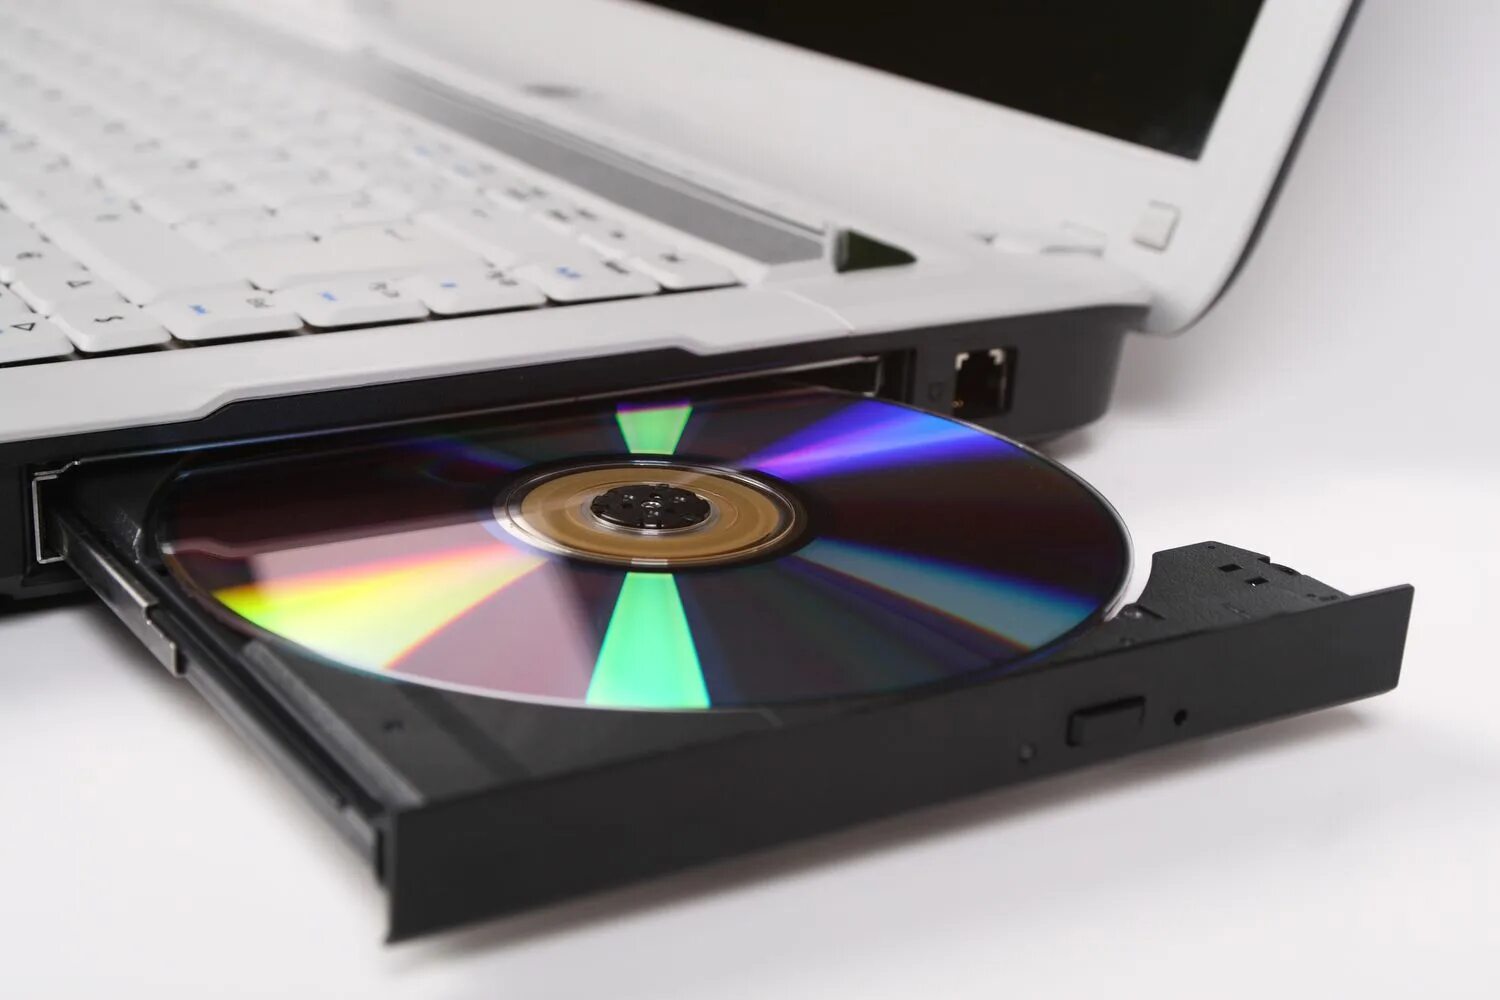 Диски ноут. Дисковод CD-ROM. Привод для СД И двд дисков. CD (Compact Disk ROM) DVD (Digital versatile Disc). CD ROM x3.